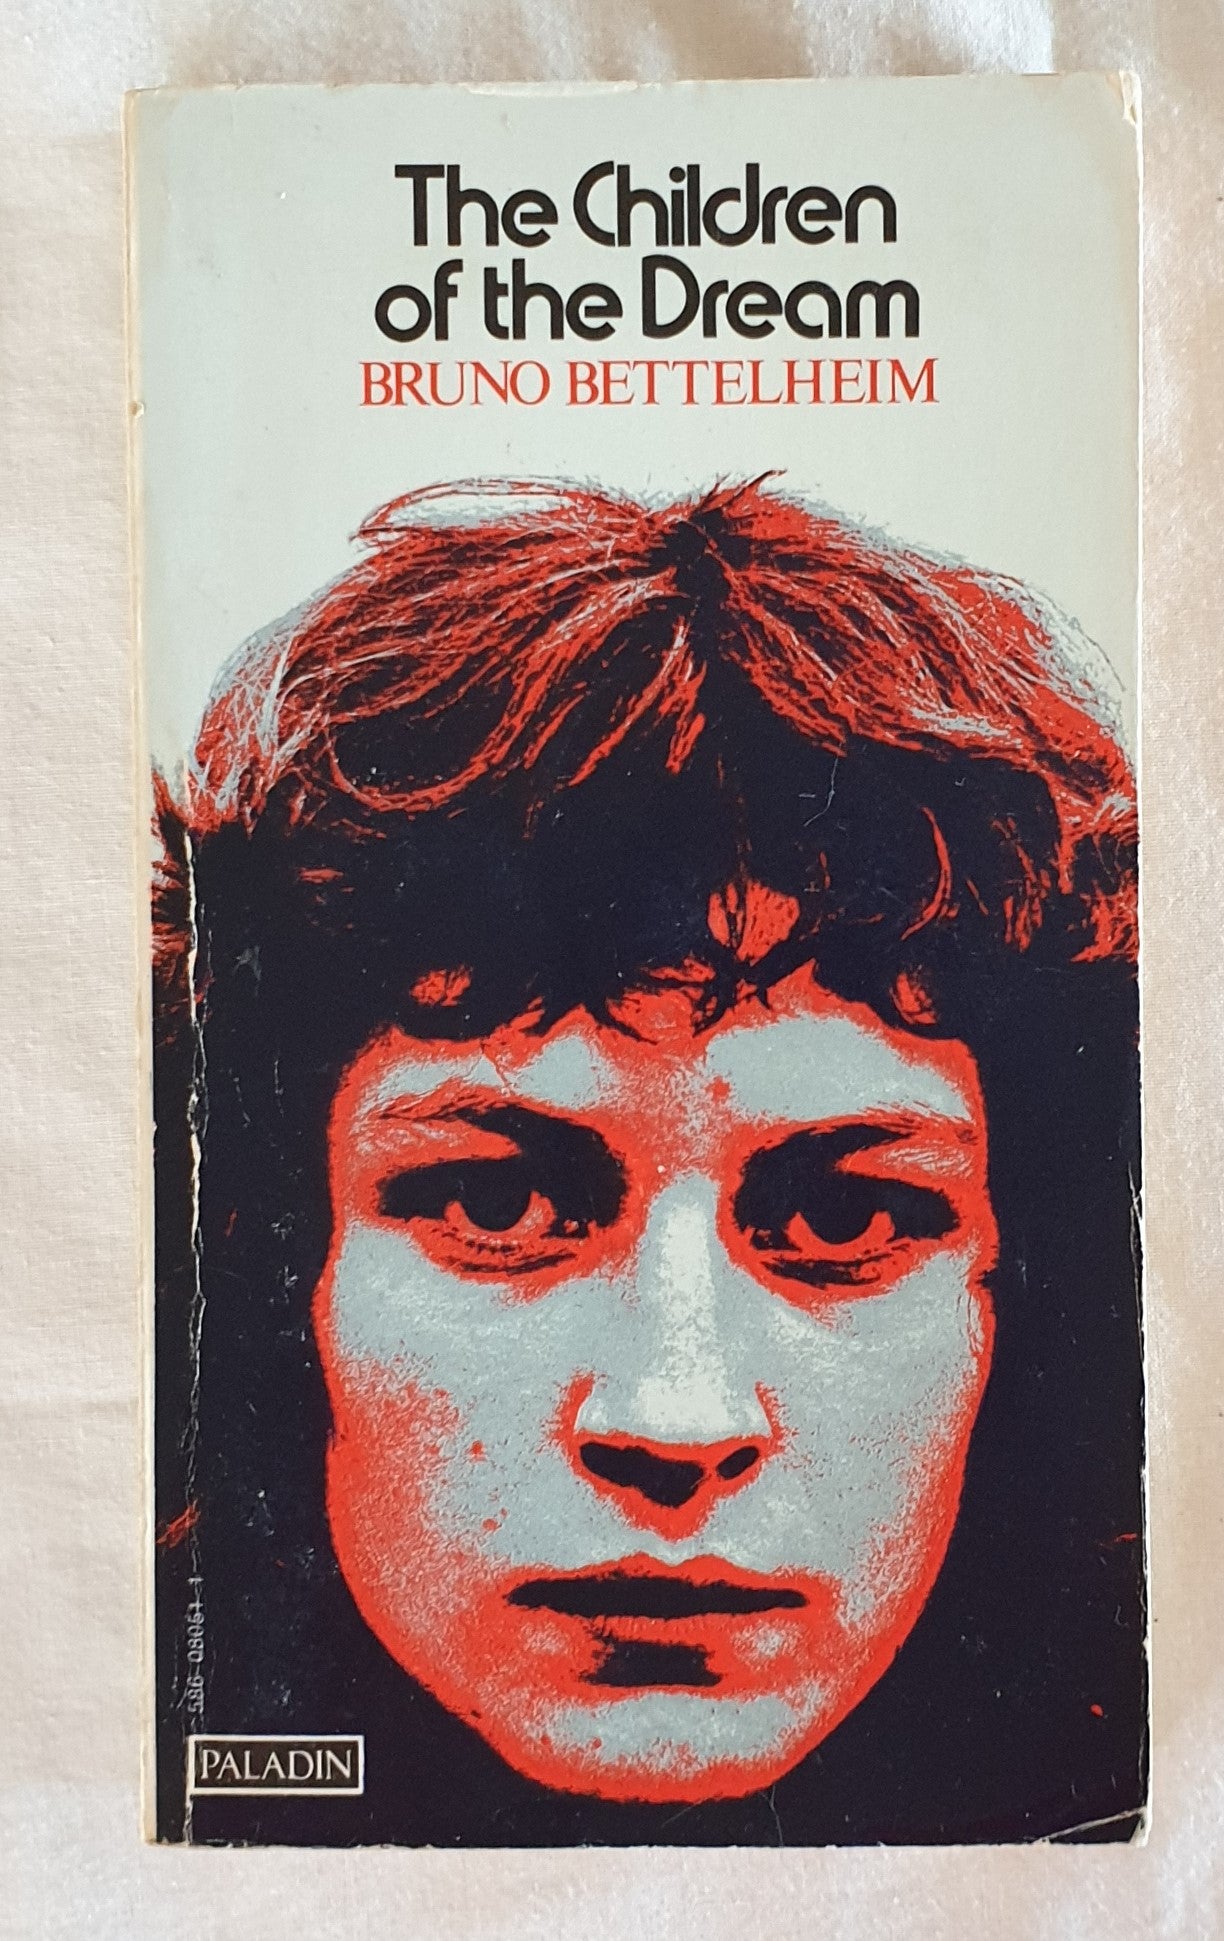 The Children of the Dream by Bruno Bettelheim